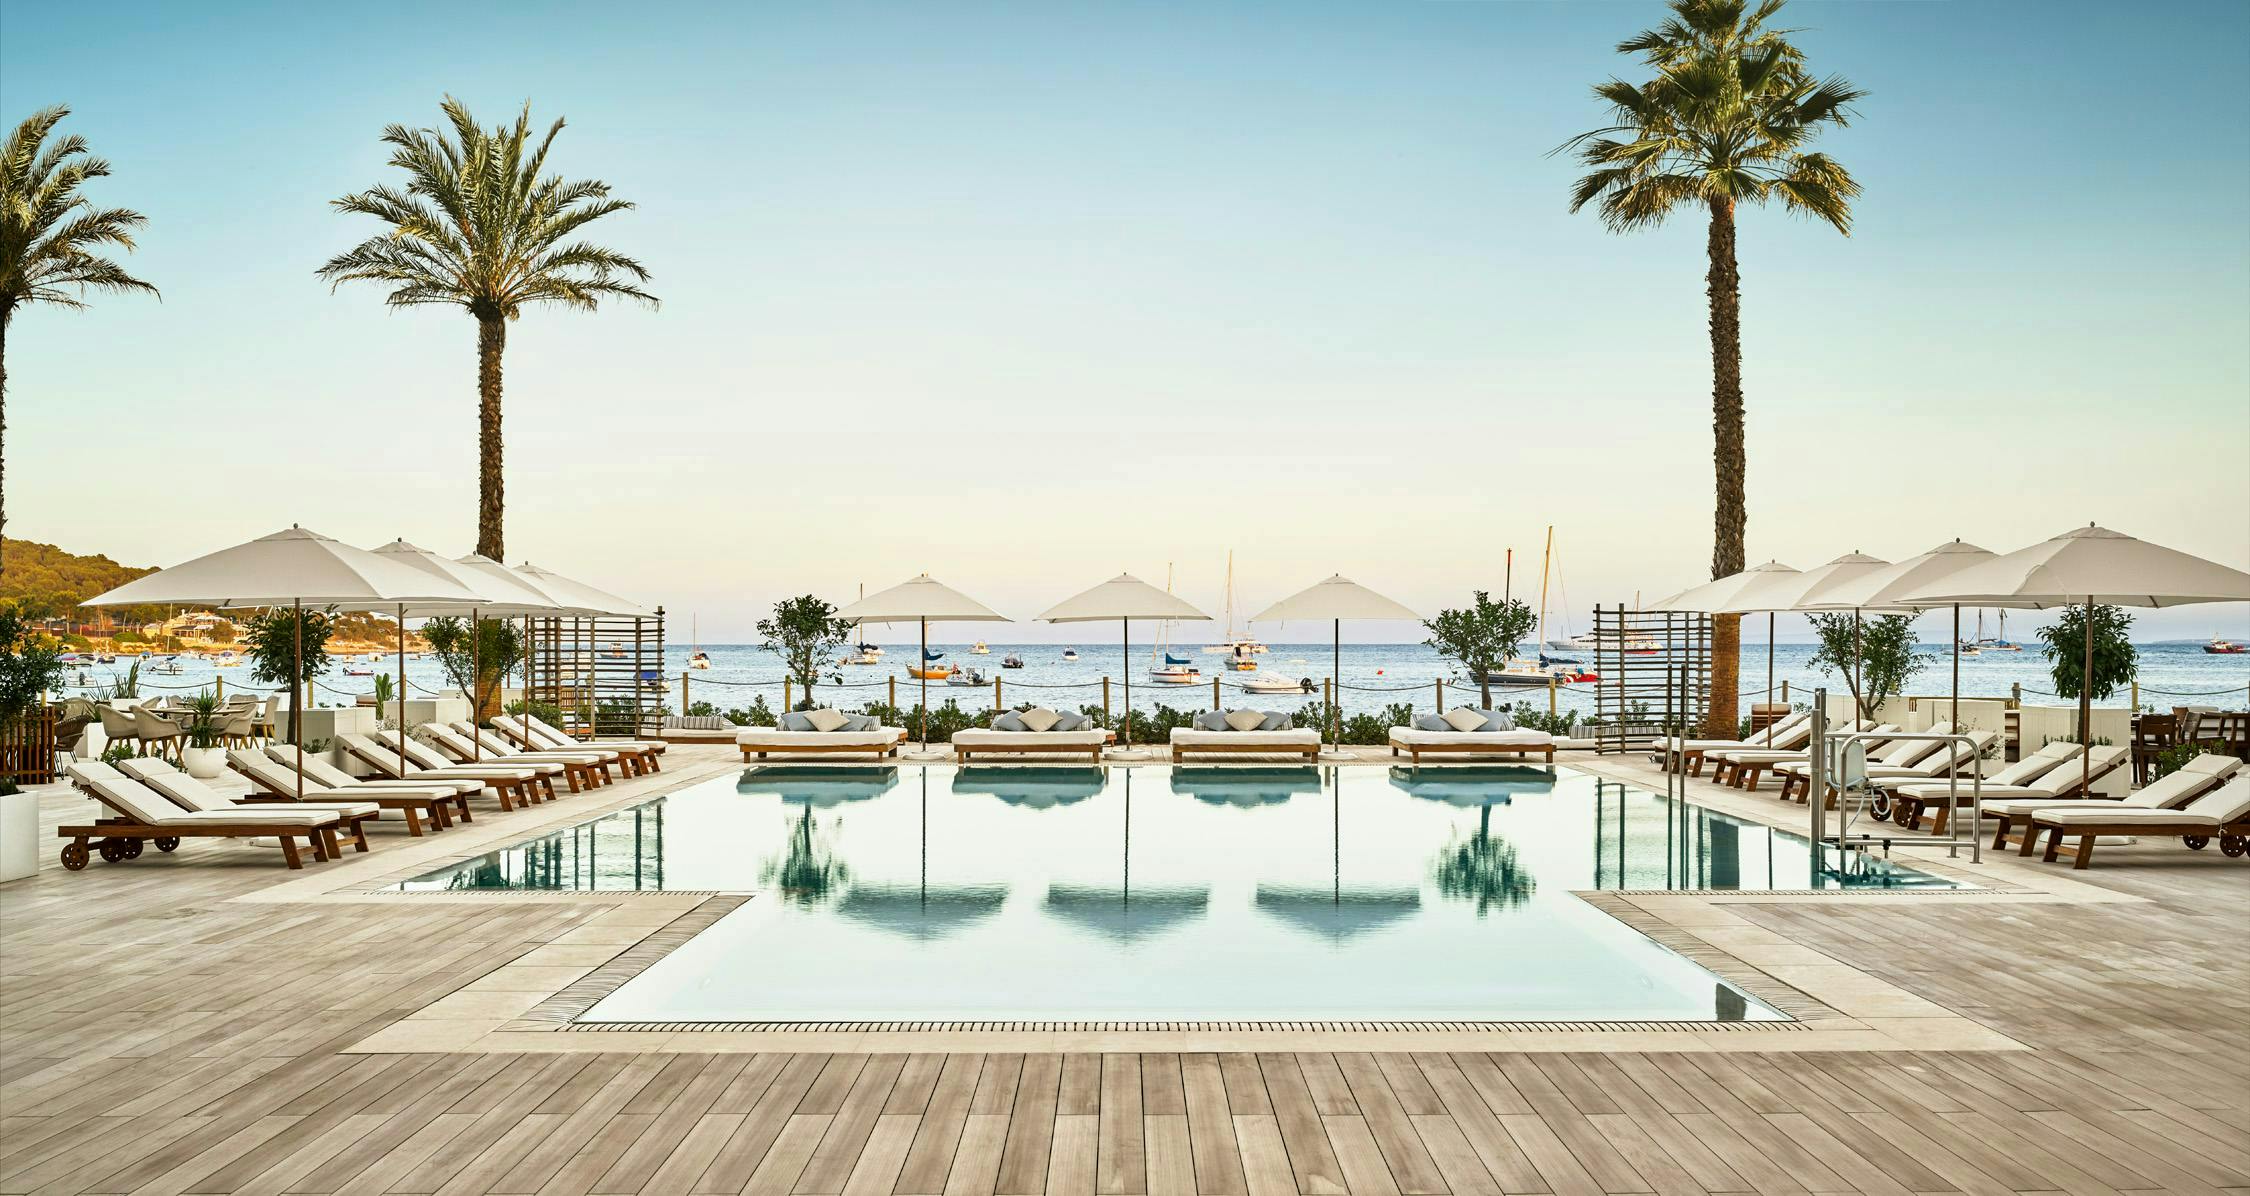 pool water hotel building resort palm tree plant arecaceae tree swimming pool